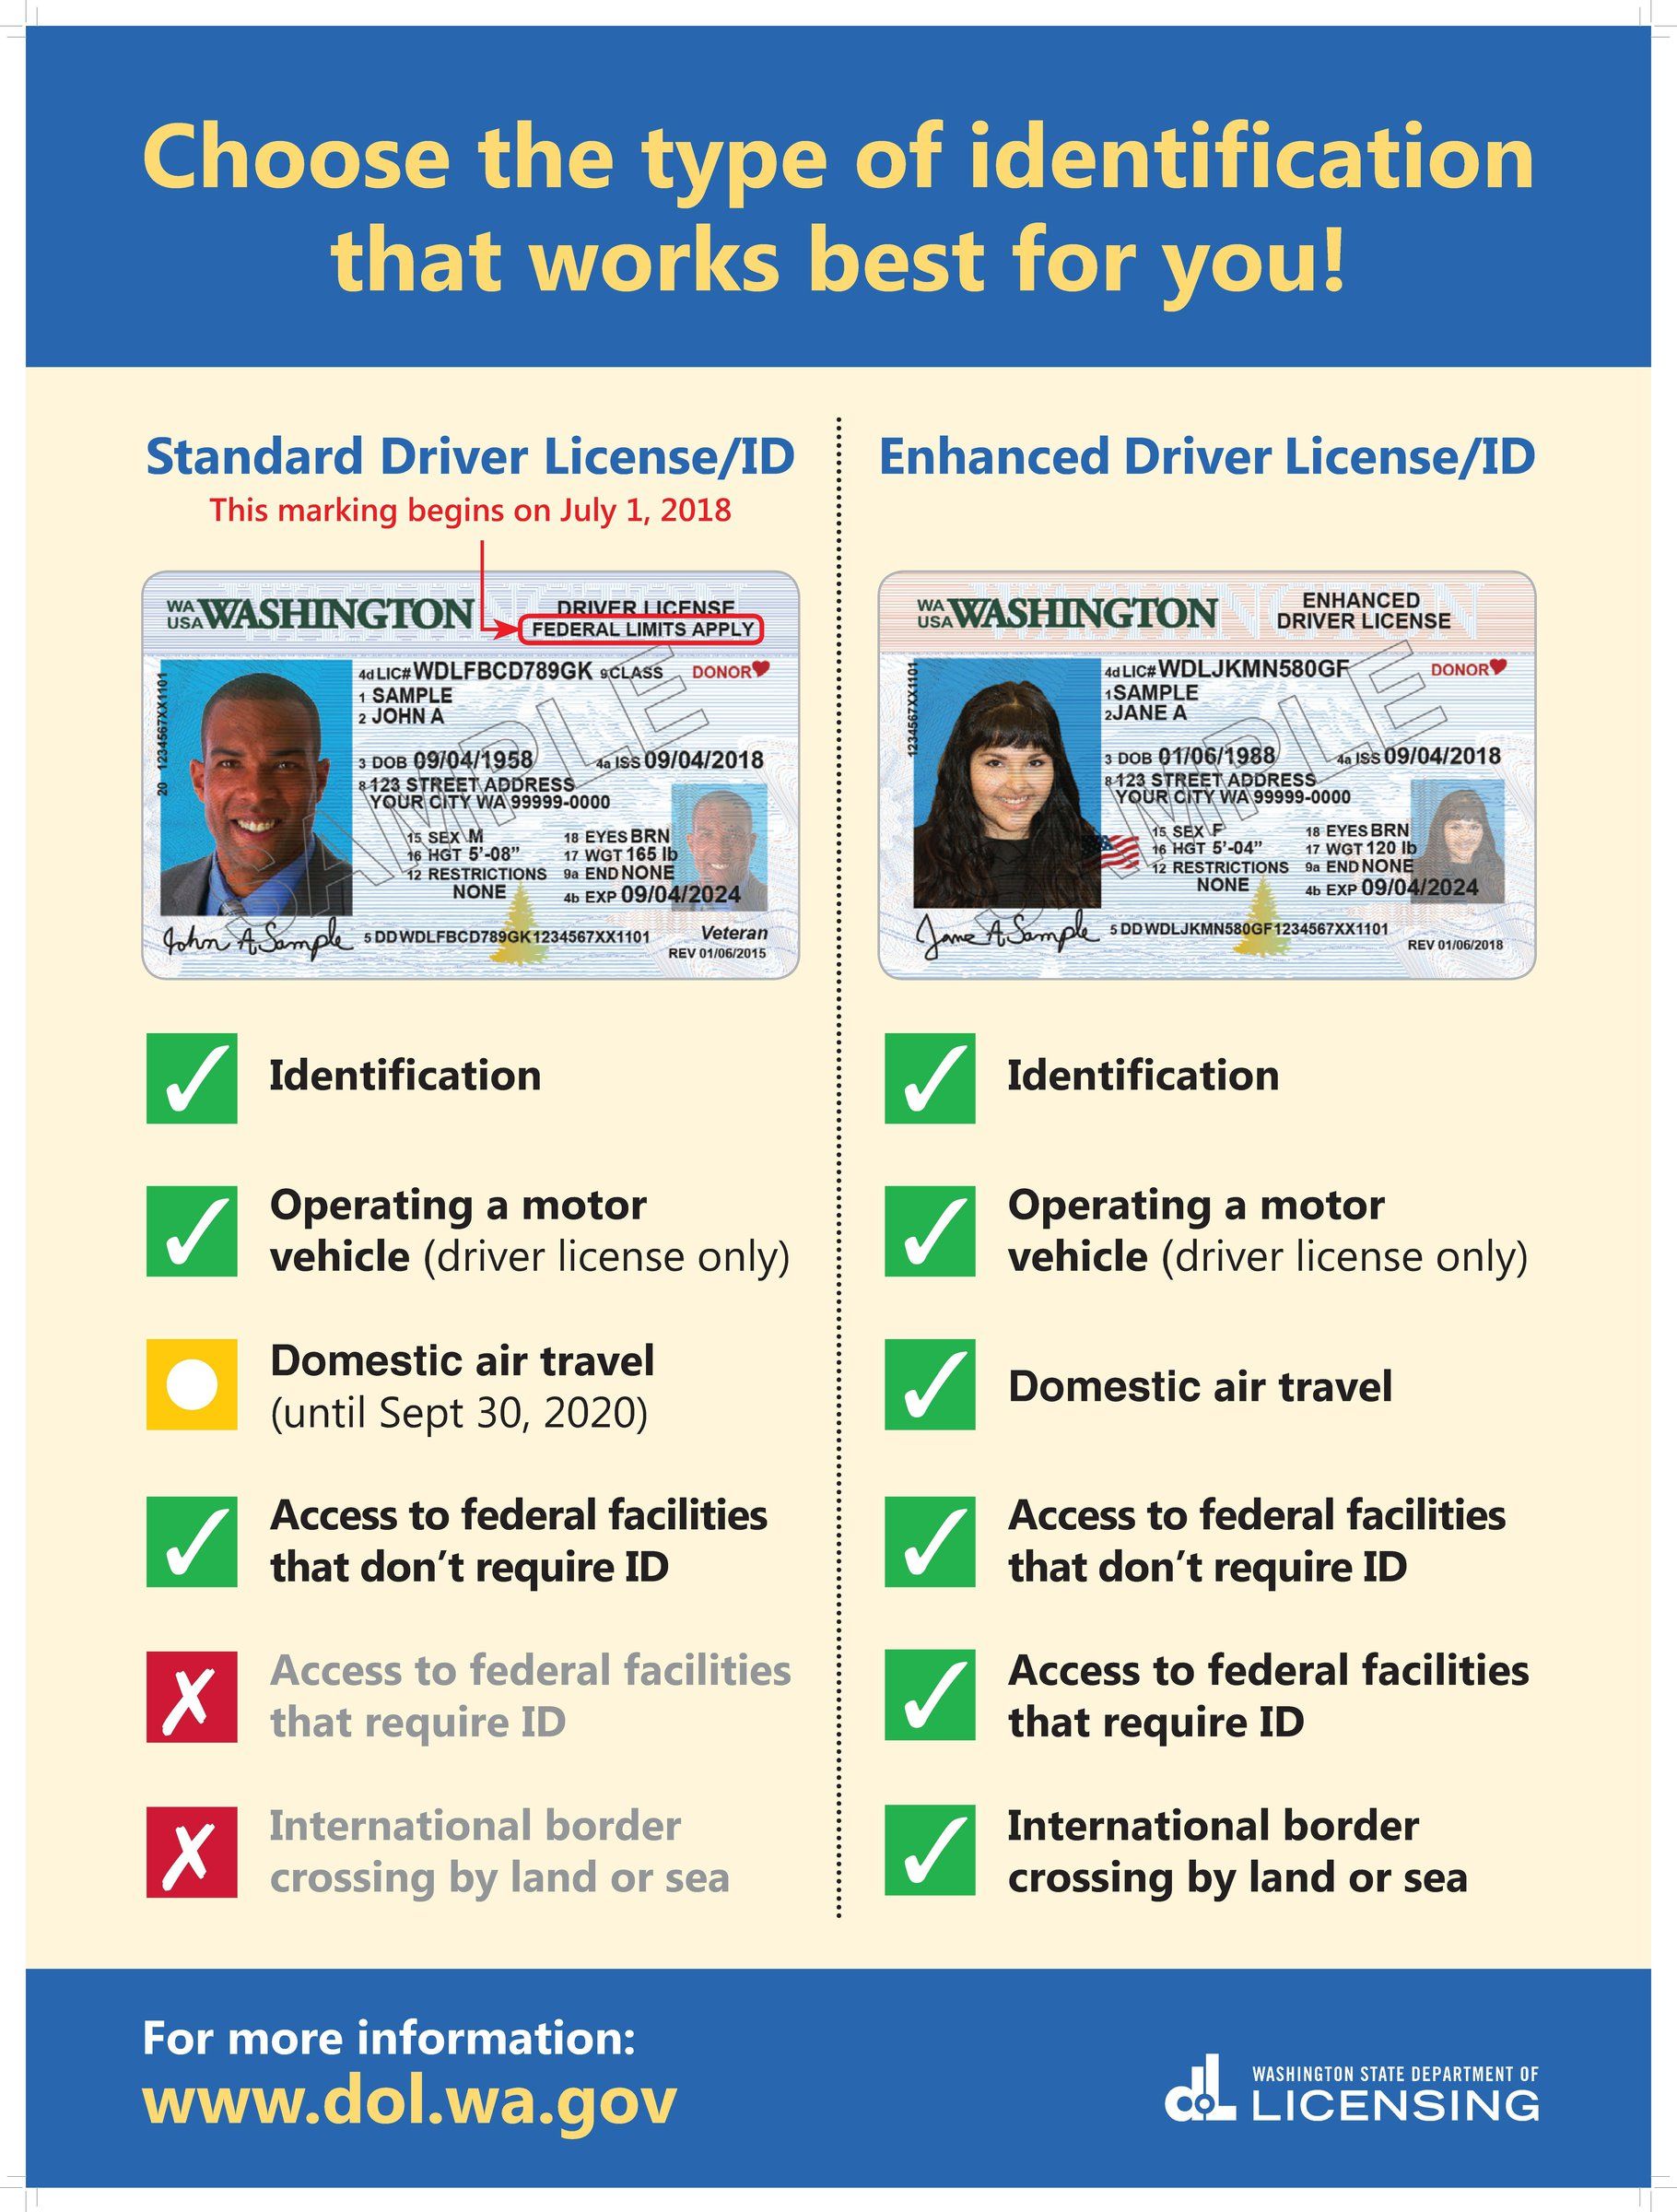 enhanced drivers license to fly washington